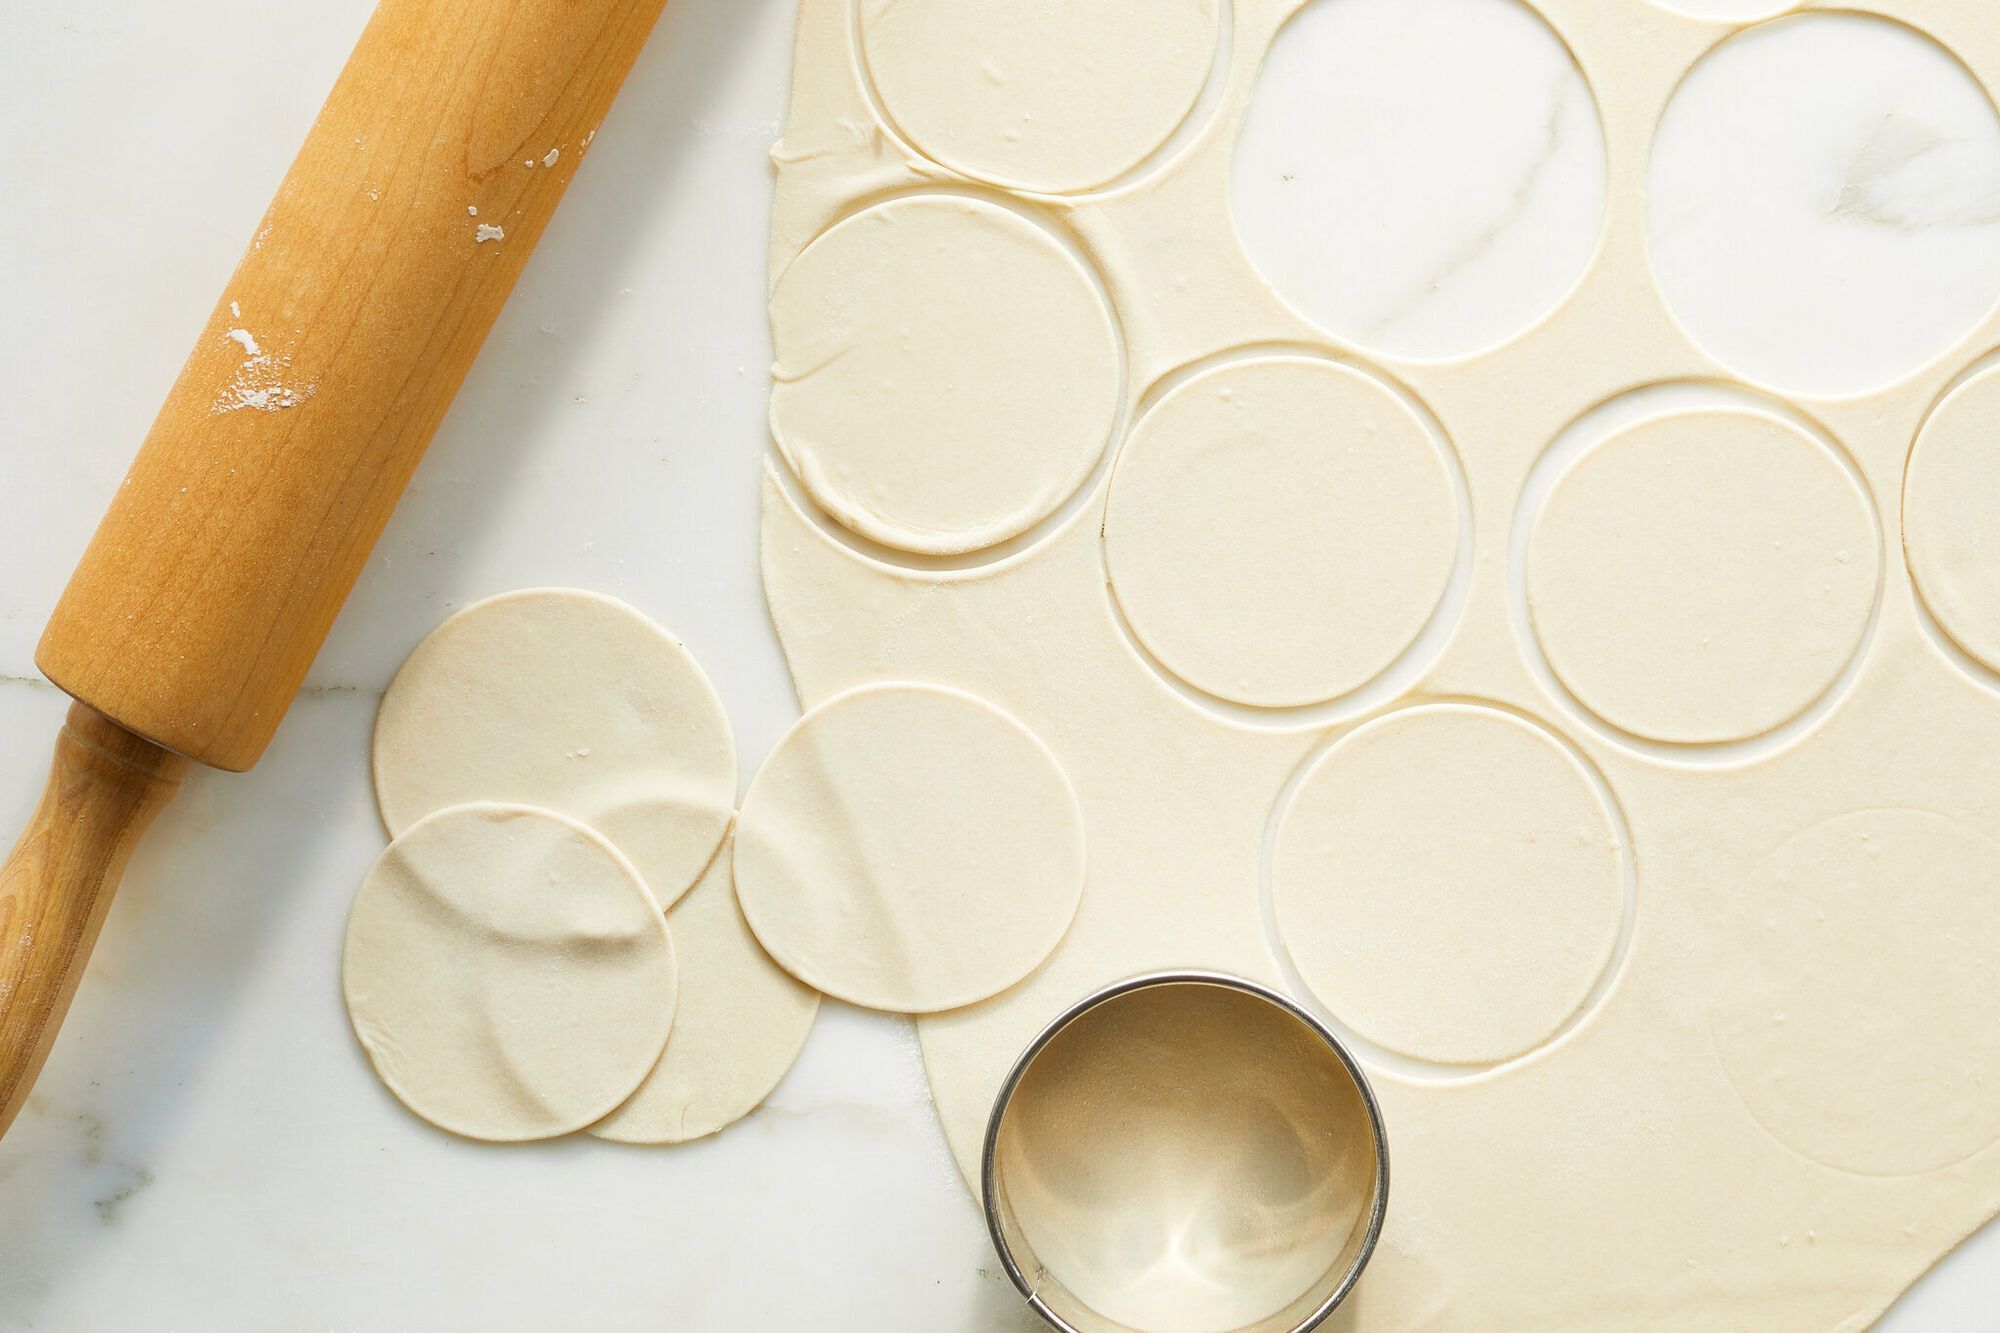 The perfect dough for dumplings